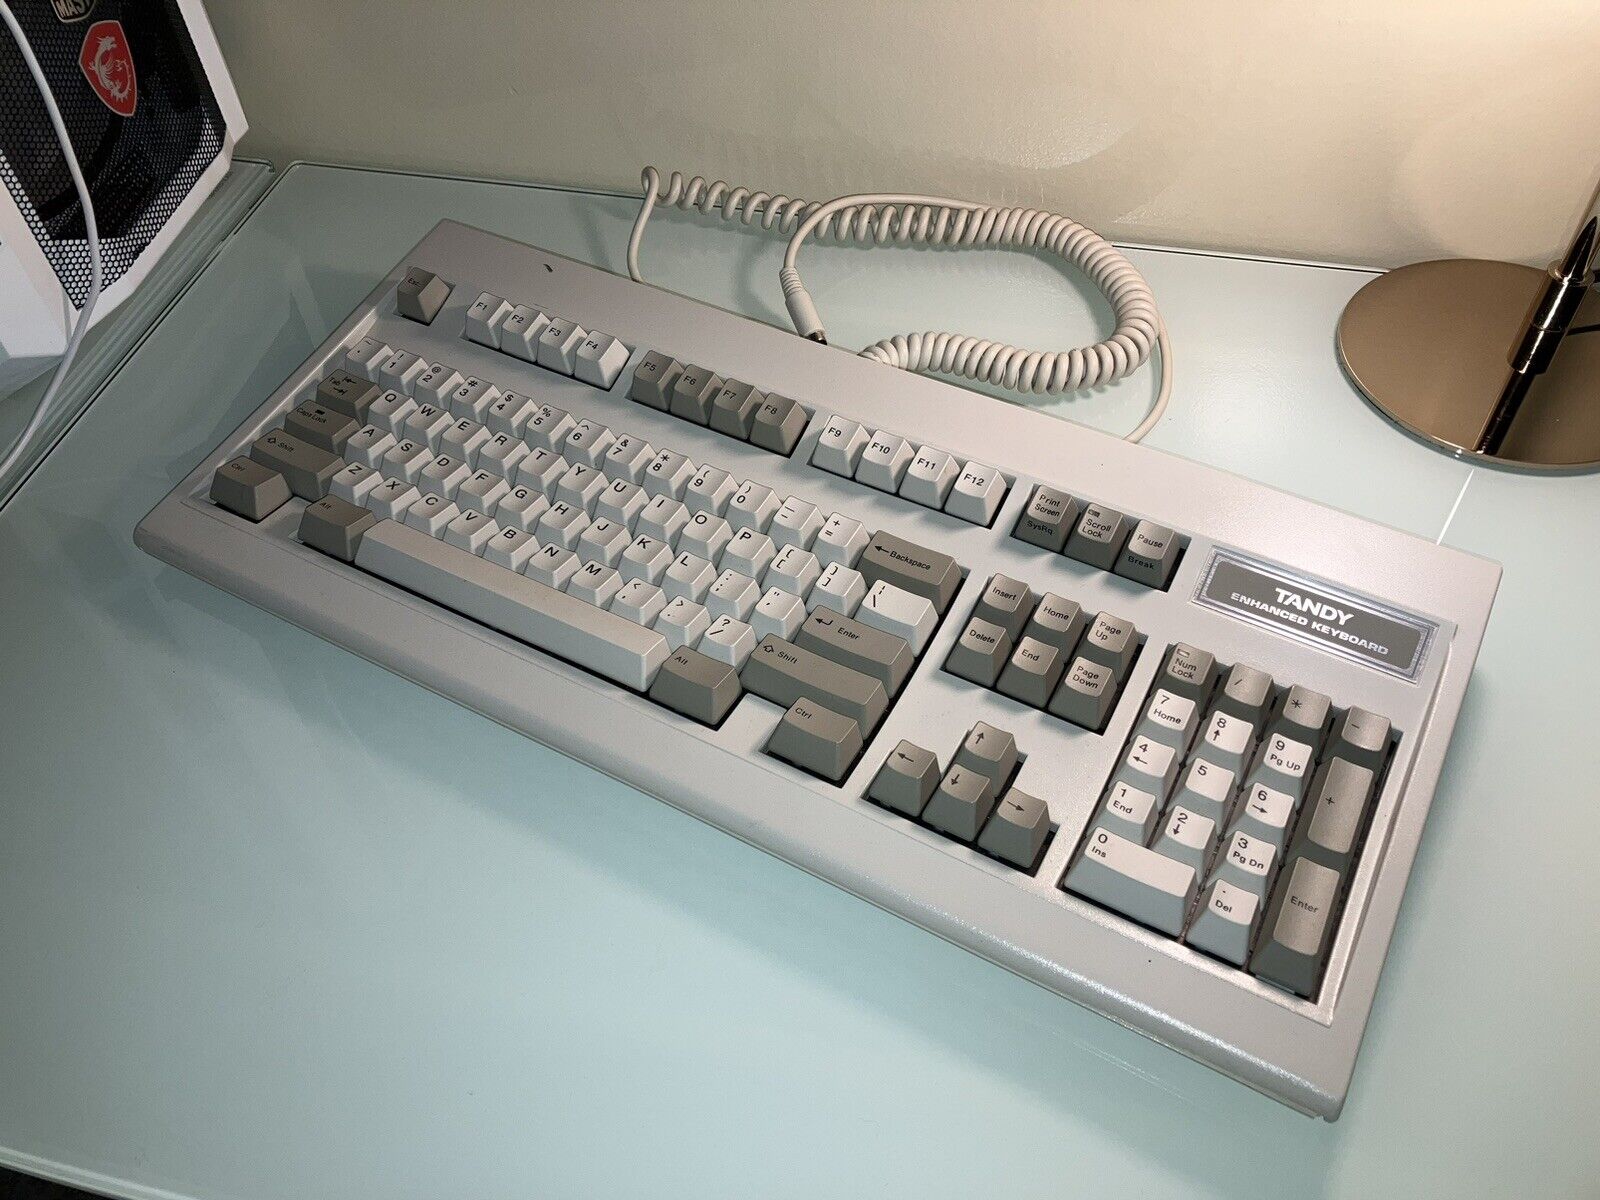 Vintage Tandy Enhanced Keyboard PS/2 Tested And Working Radio Shack PC Keyboard